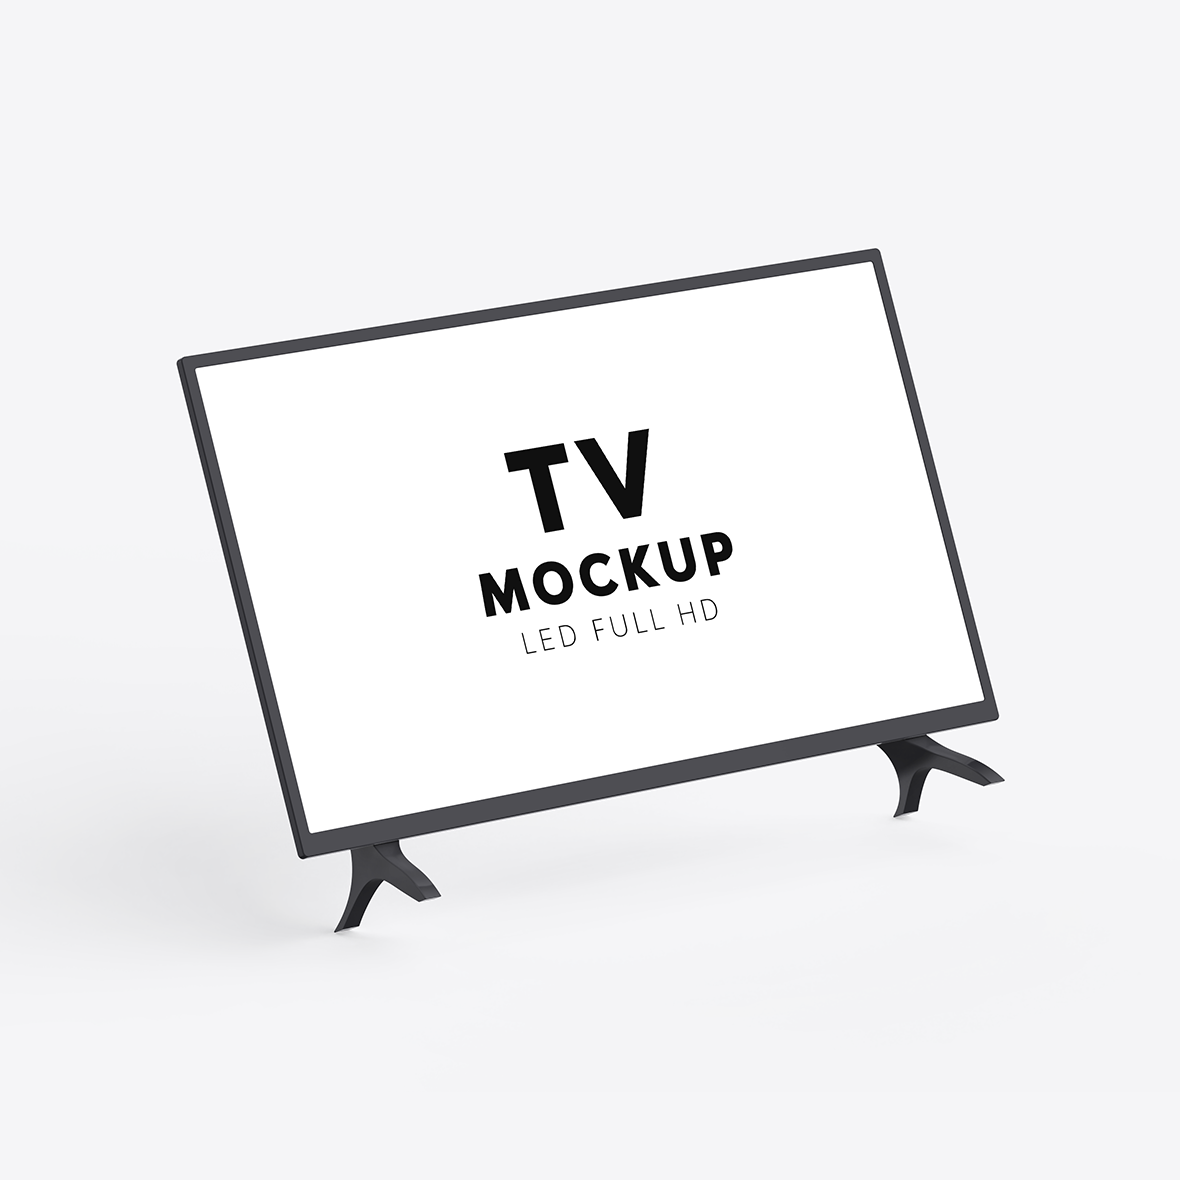 TV Mockup